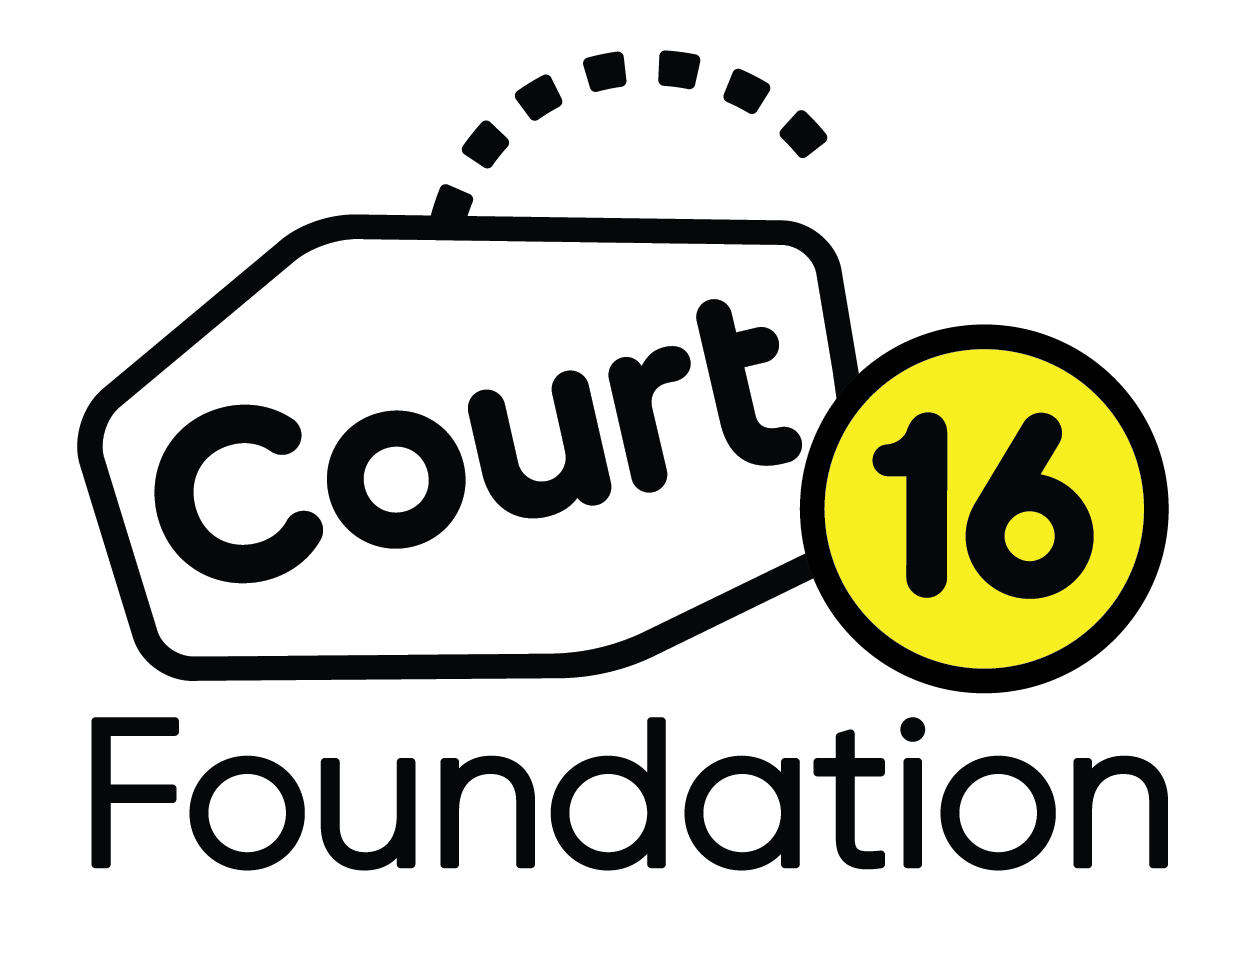 Court 16 Foundation